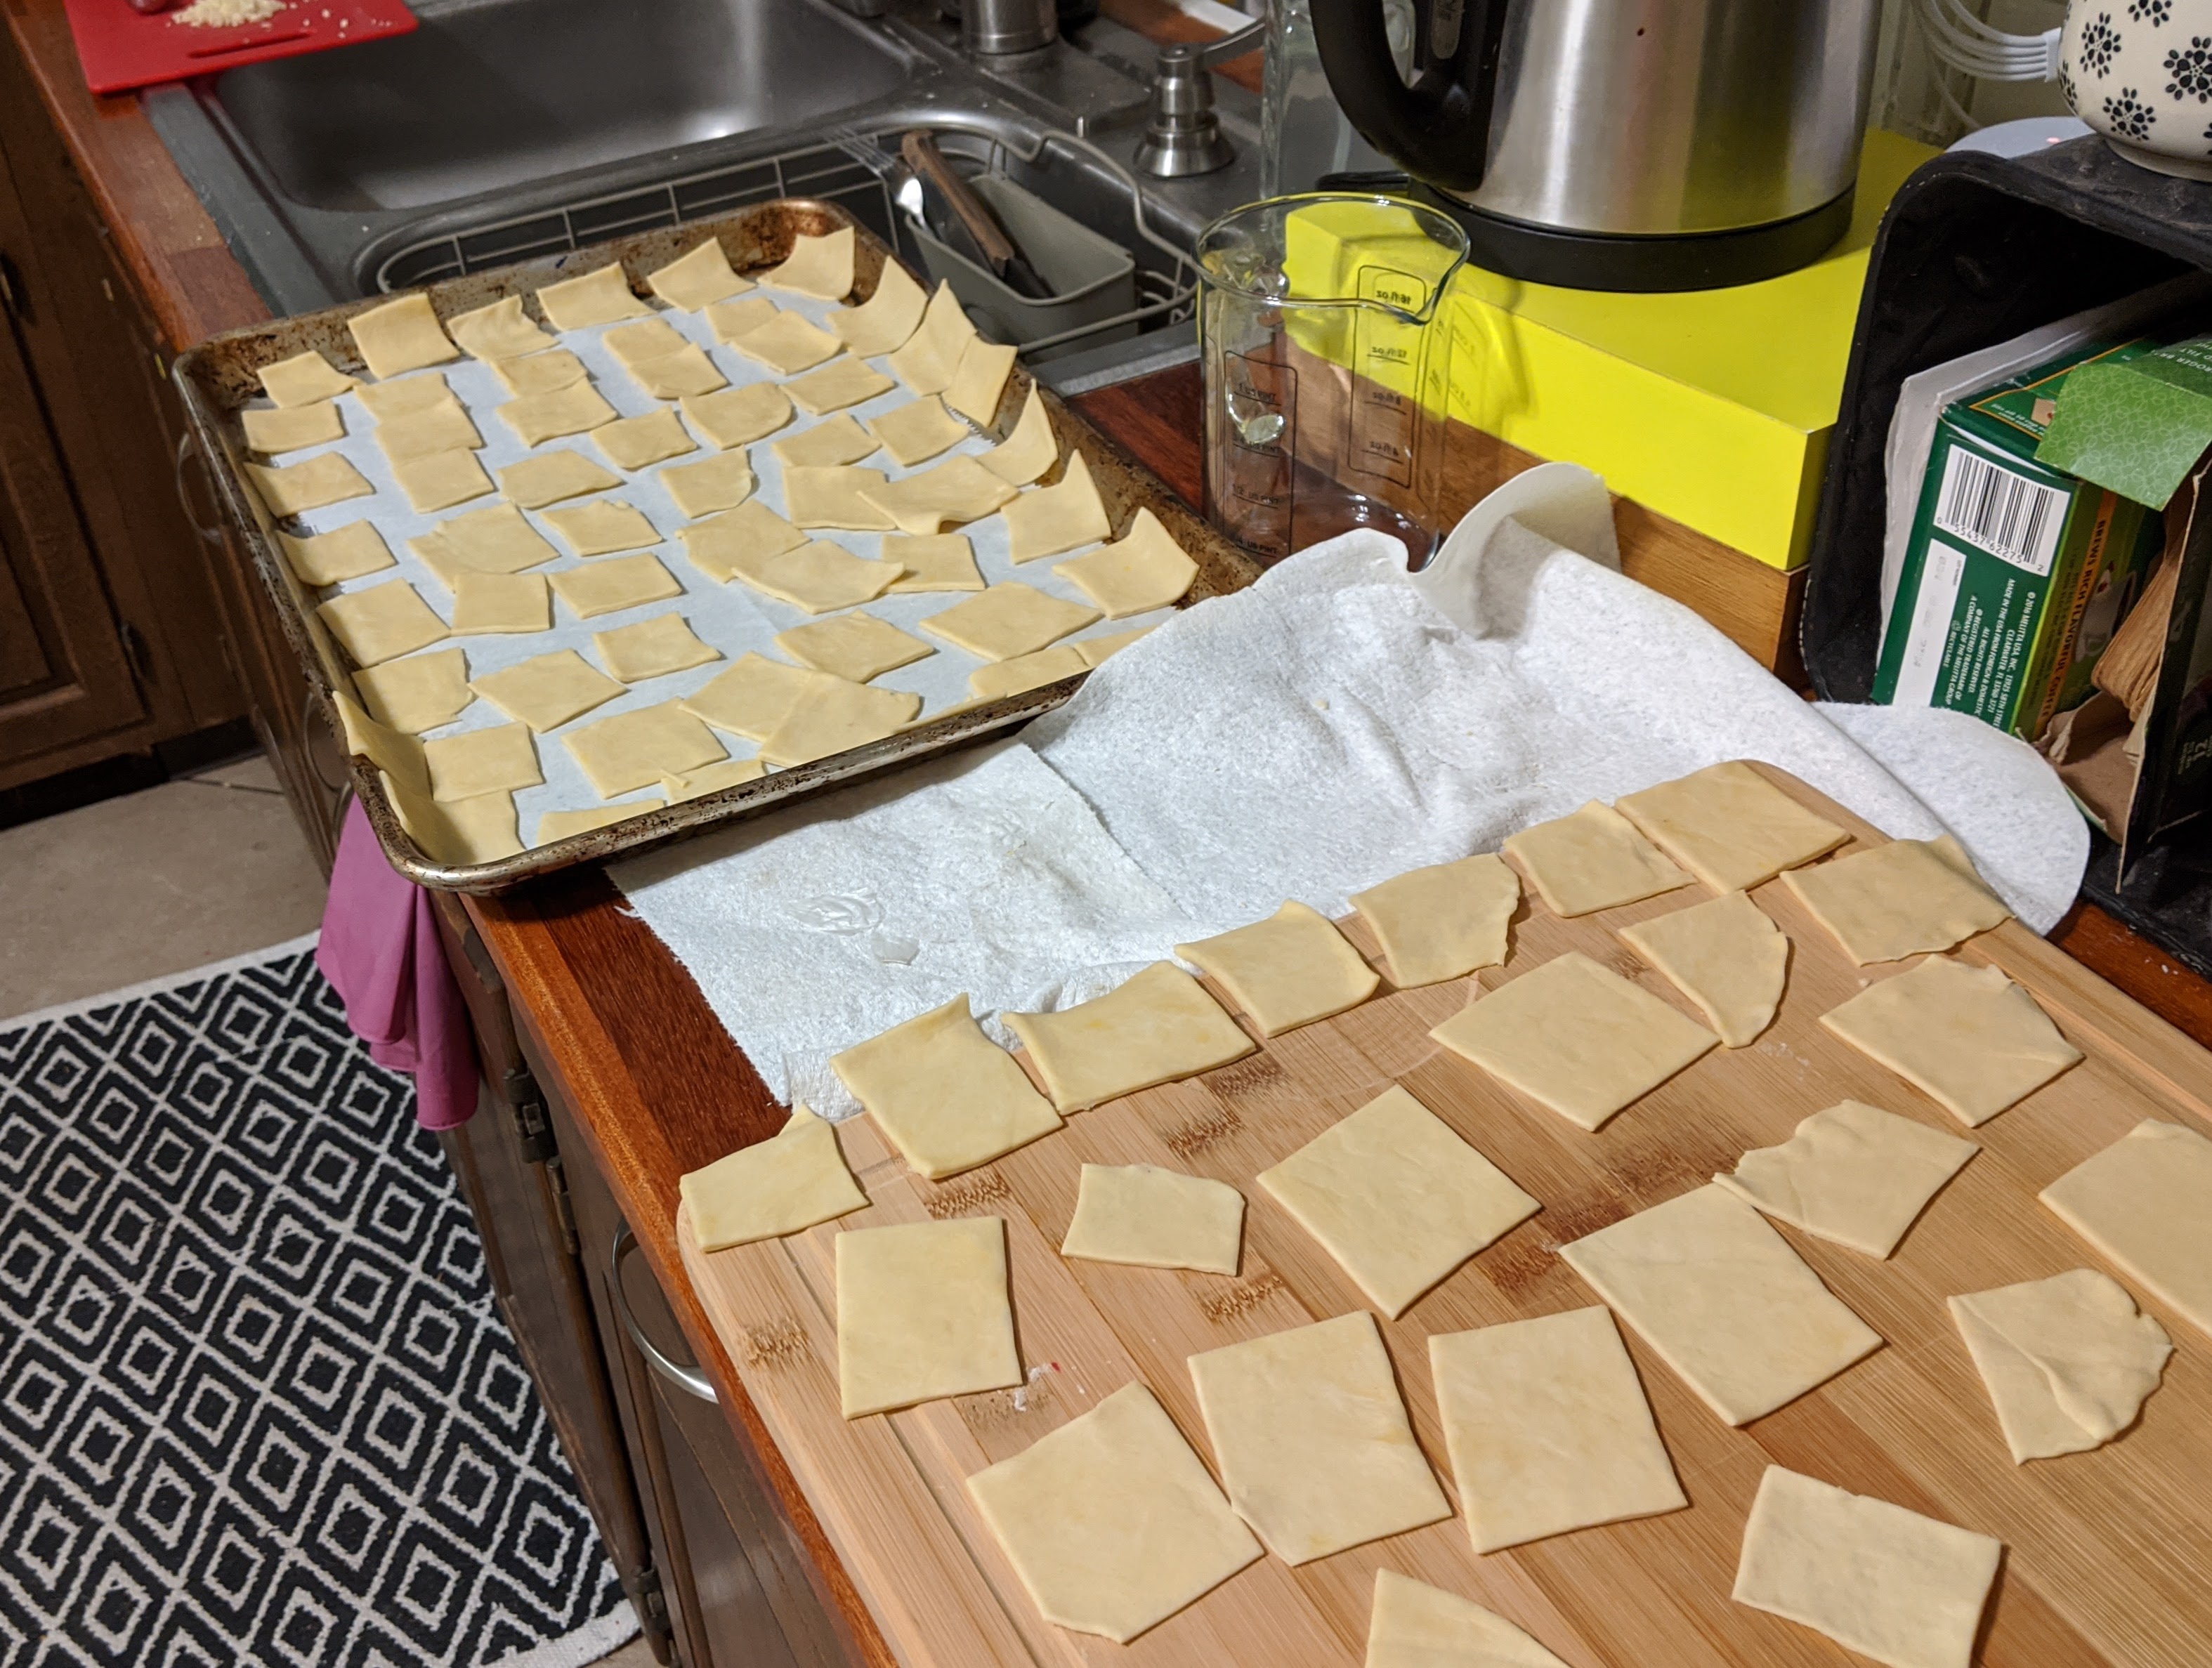 Dough cut into squares